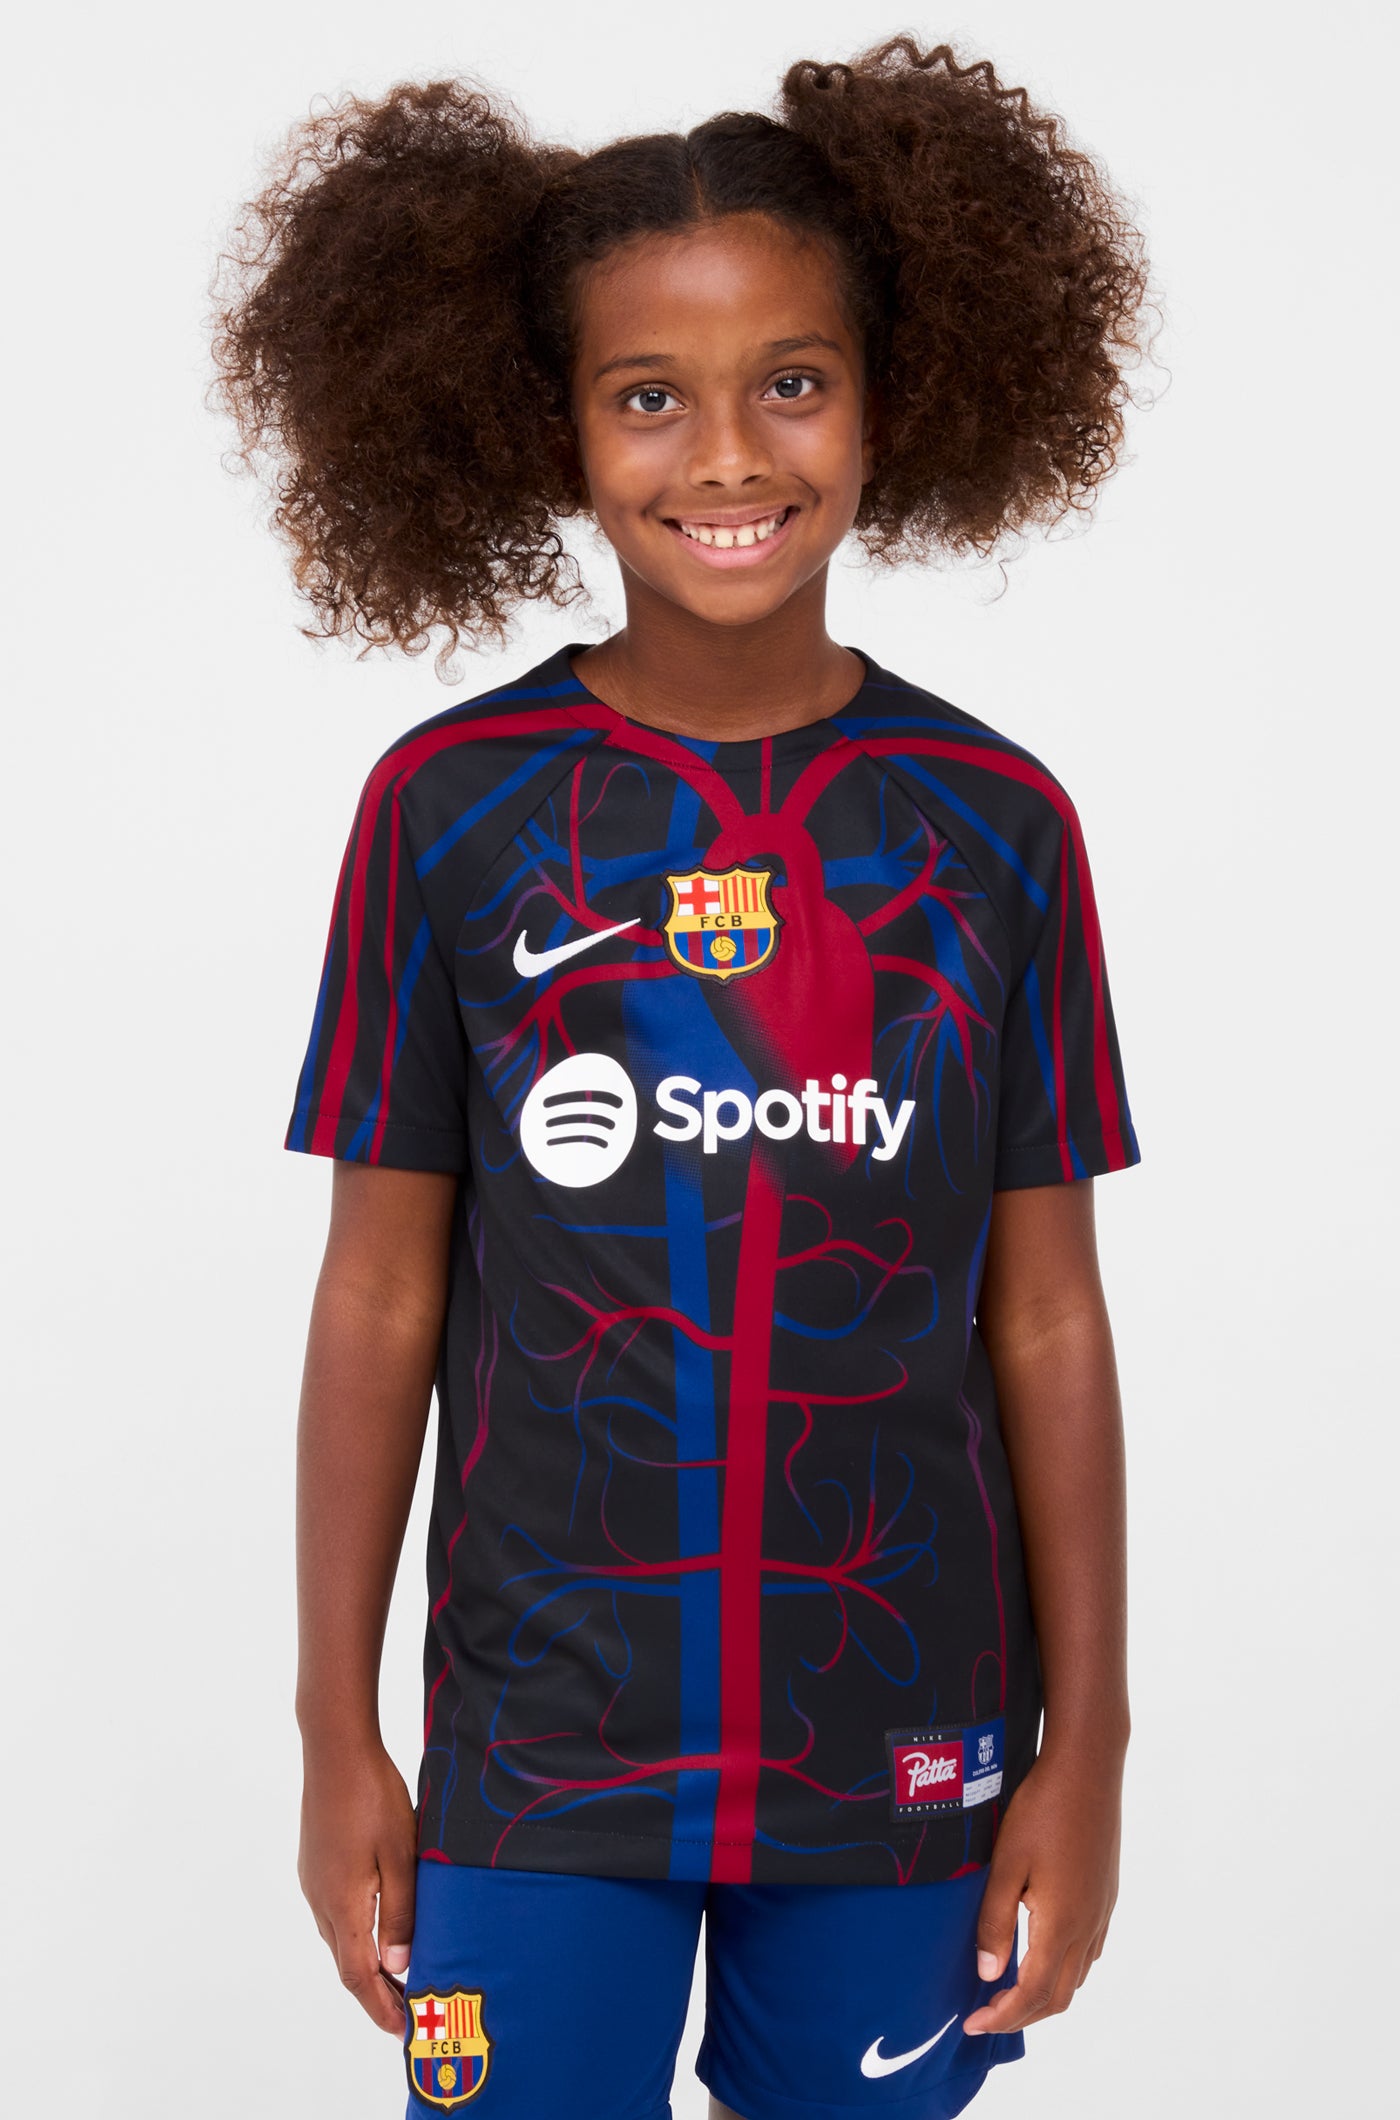 Spotify — Spotify x FC Barcelona